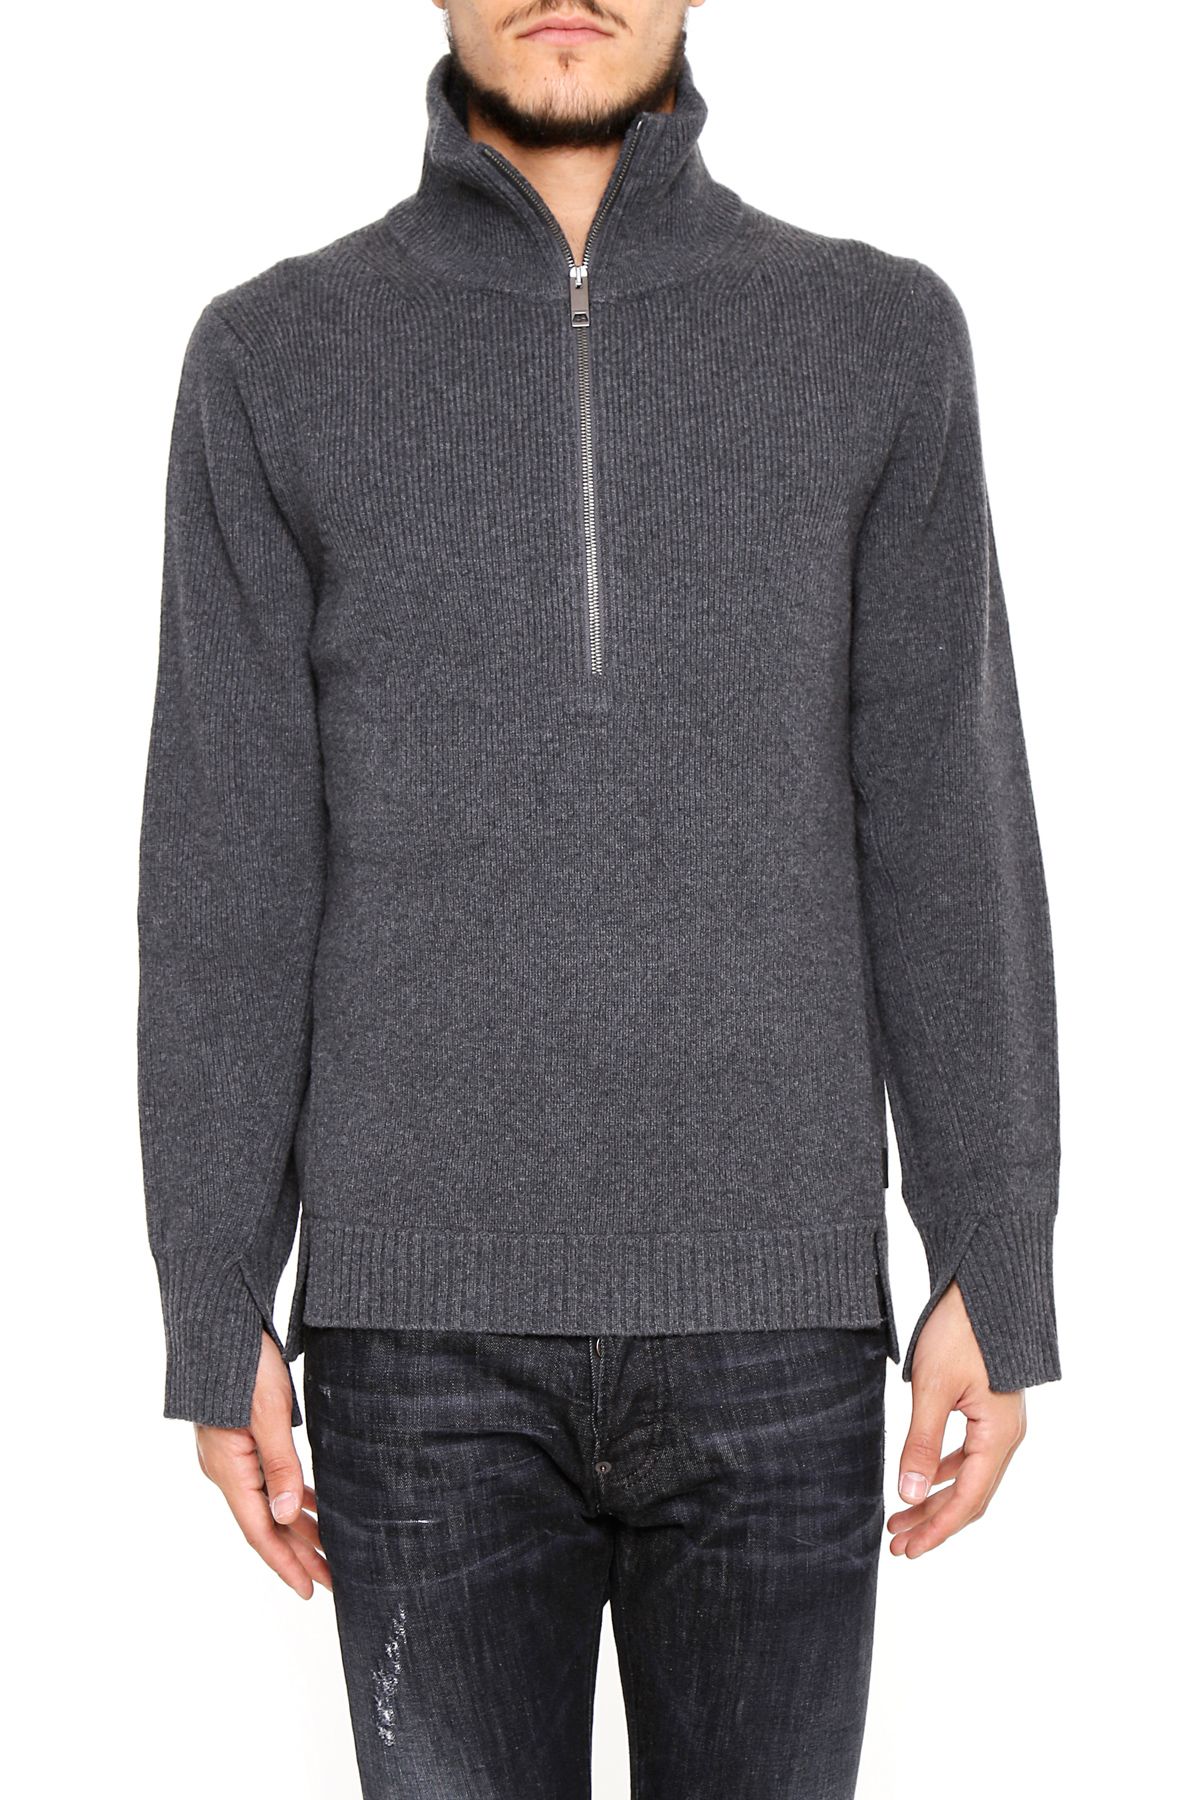 BURBERRY Farnborough Merino Wool Sweater in Mid Grey Melange | ModeSens